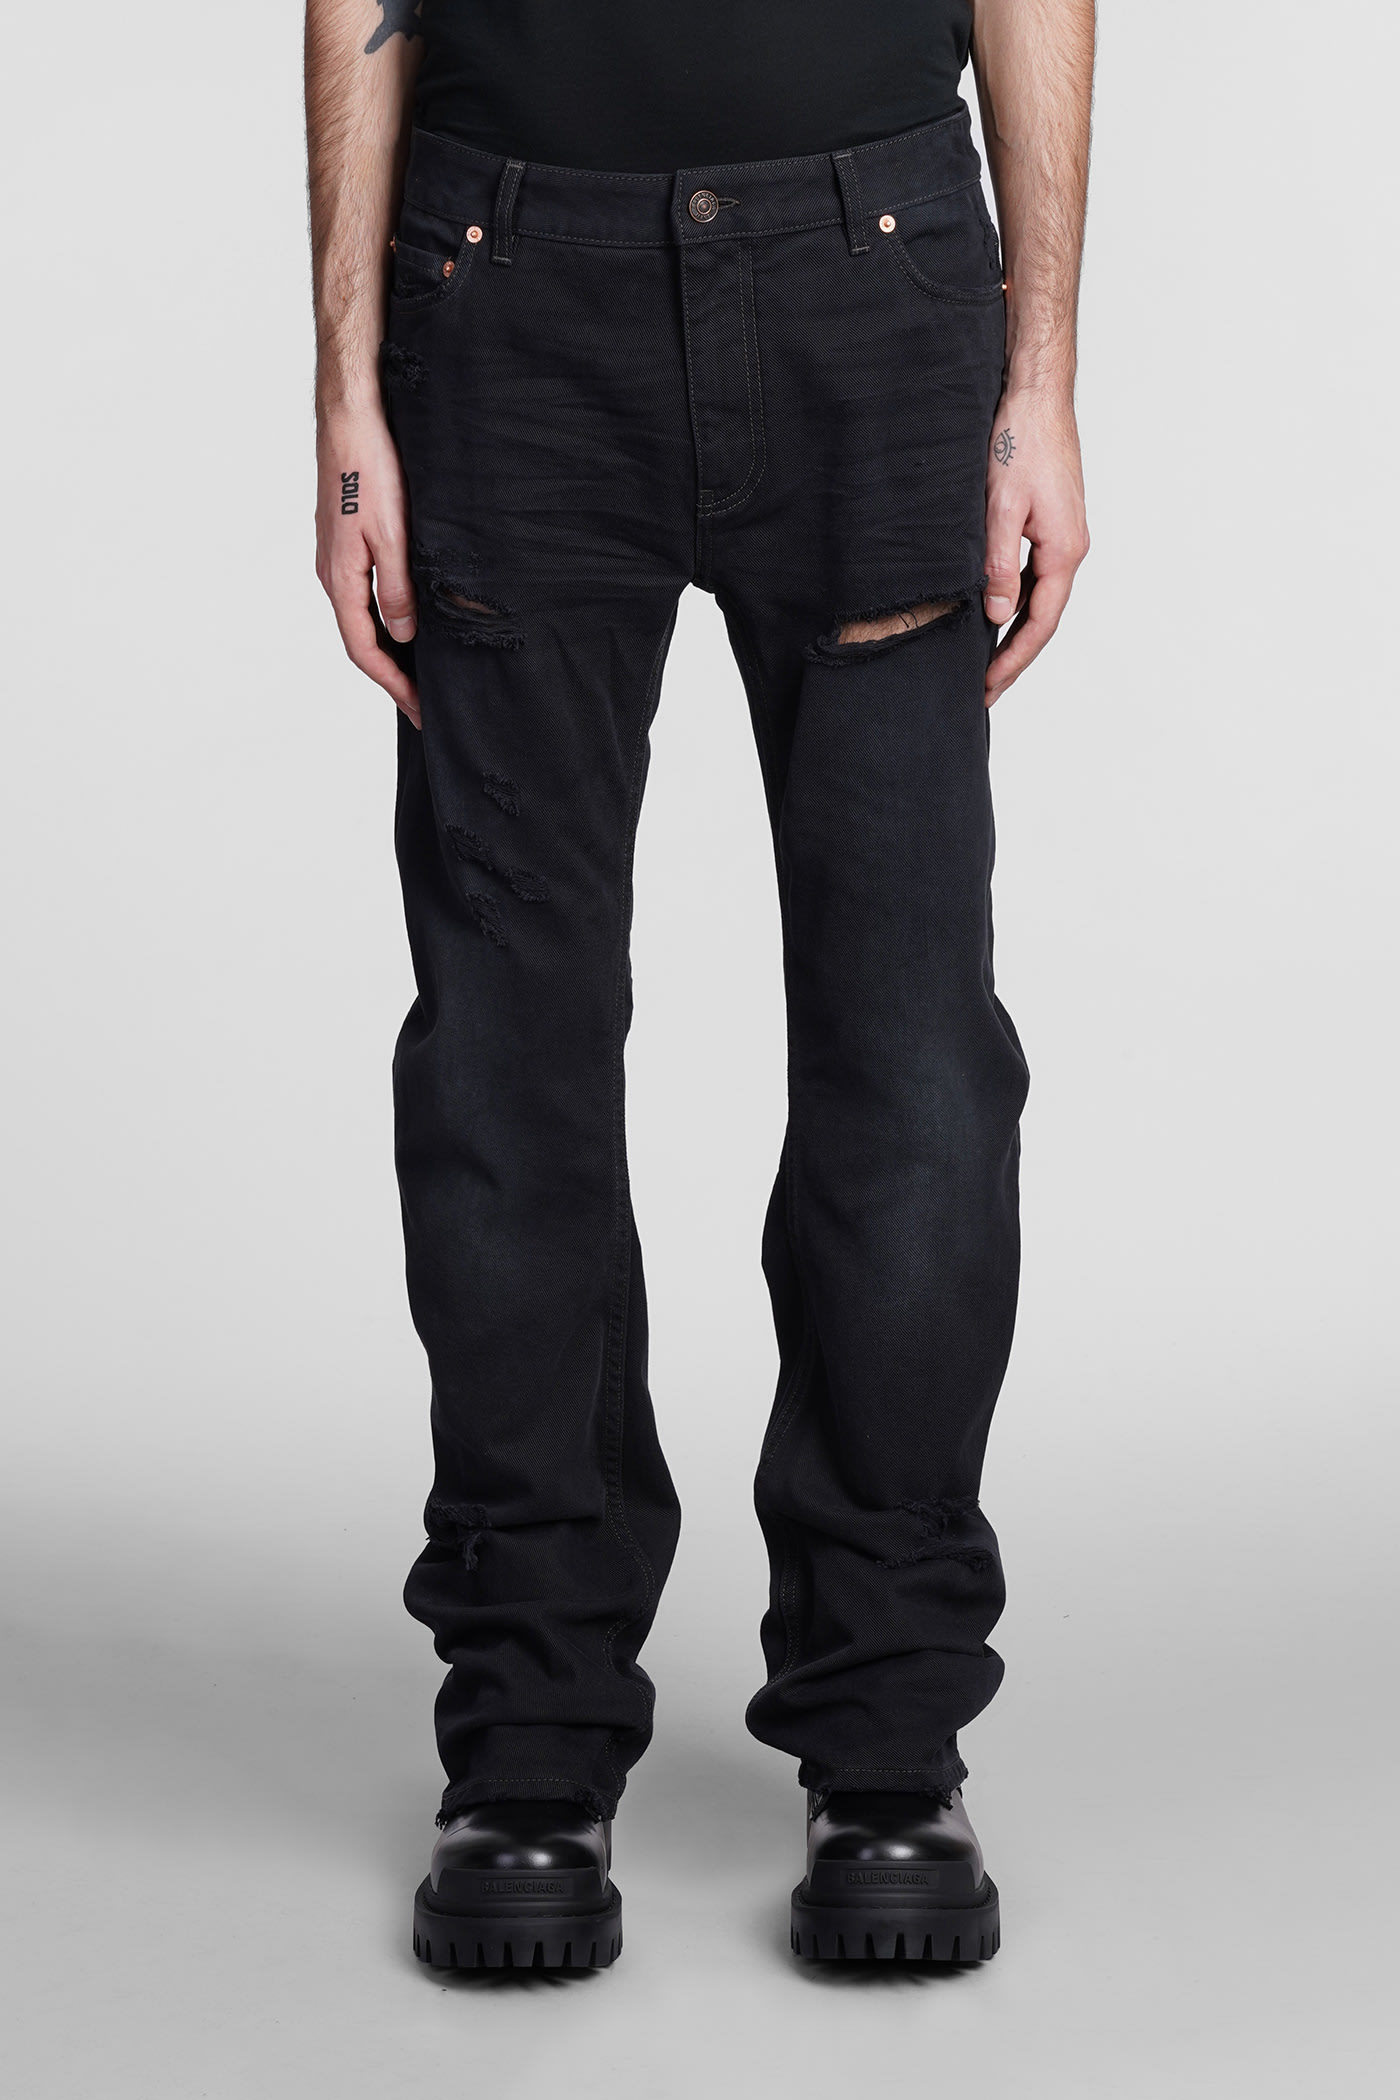 Balenciaga Jeans In Black Denim